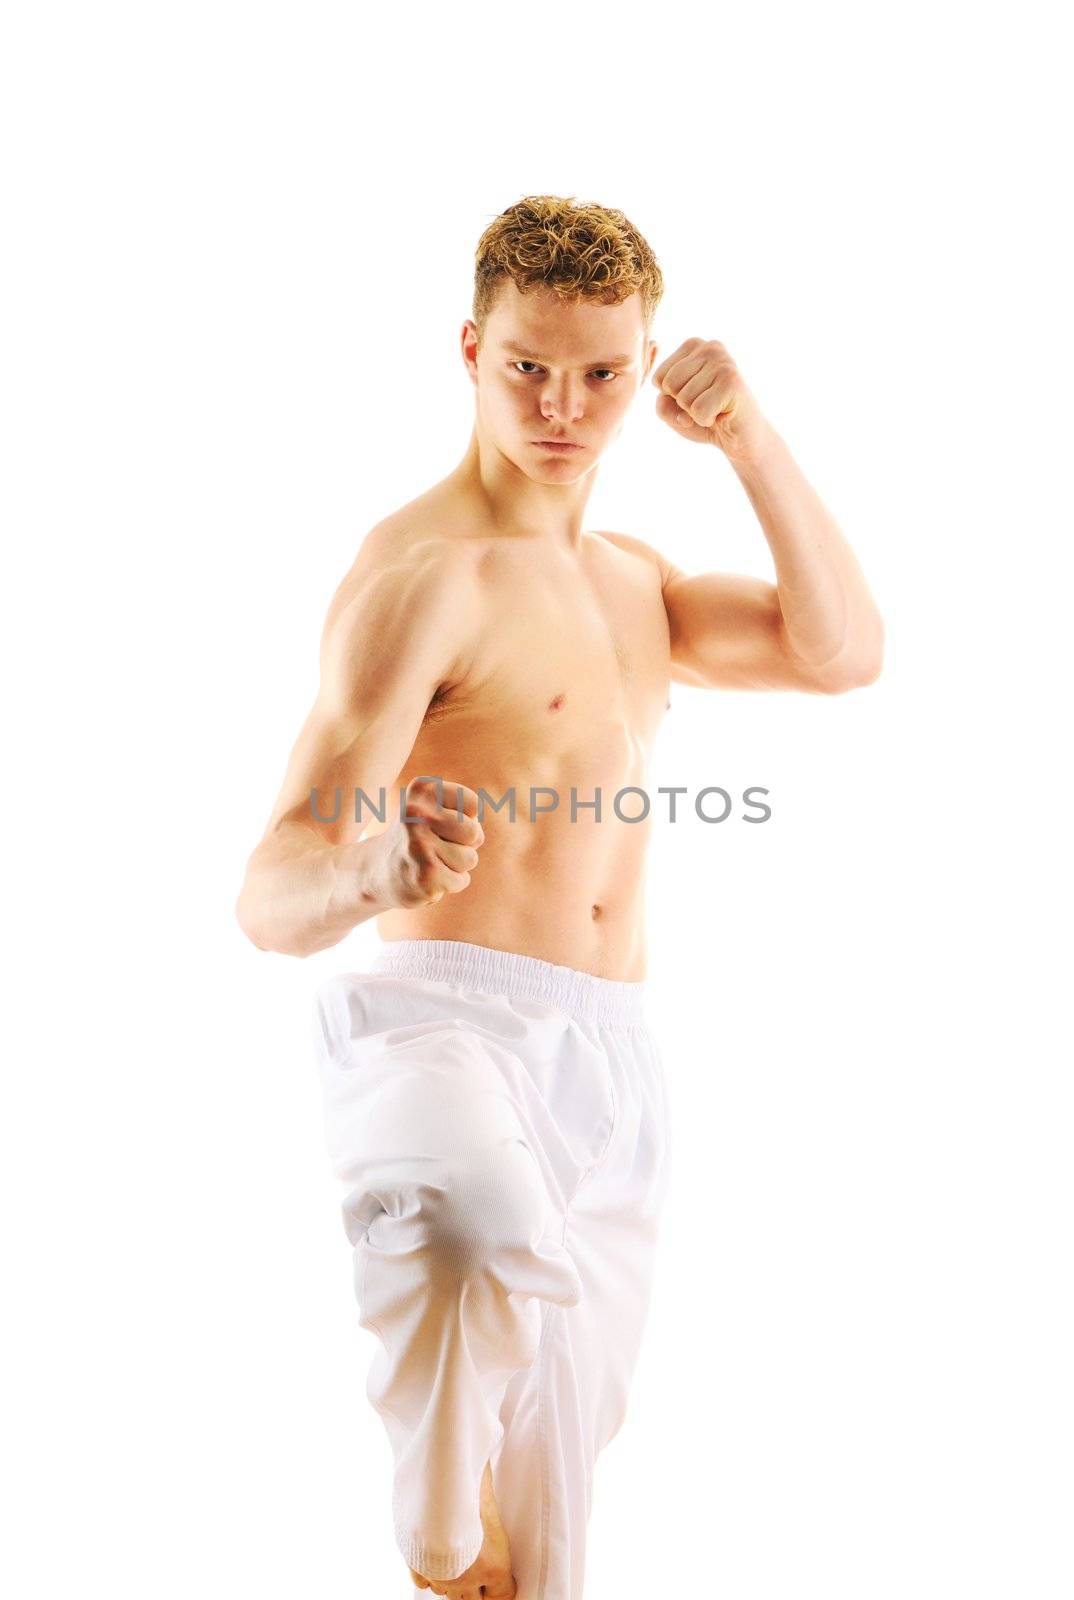 Man training taekwondo by haveseen